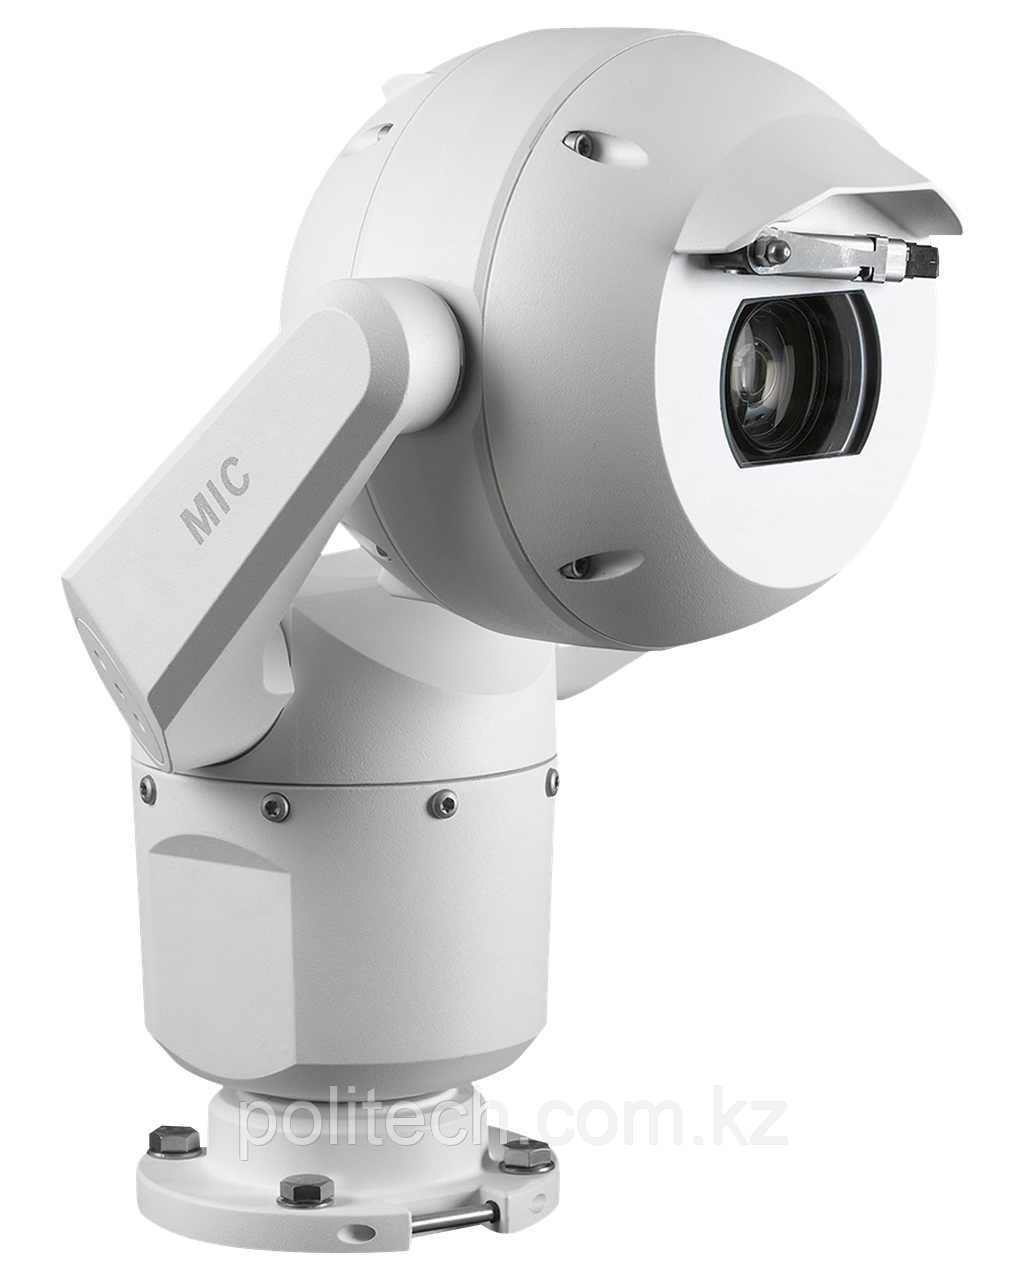 Поворотная камера Bosch MIC IP starlight 7000i